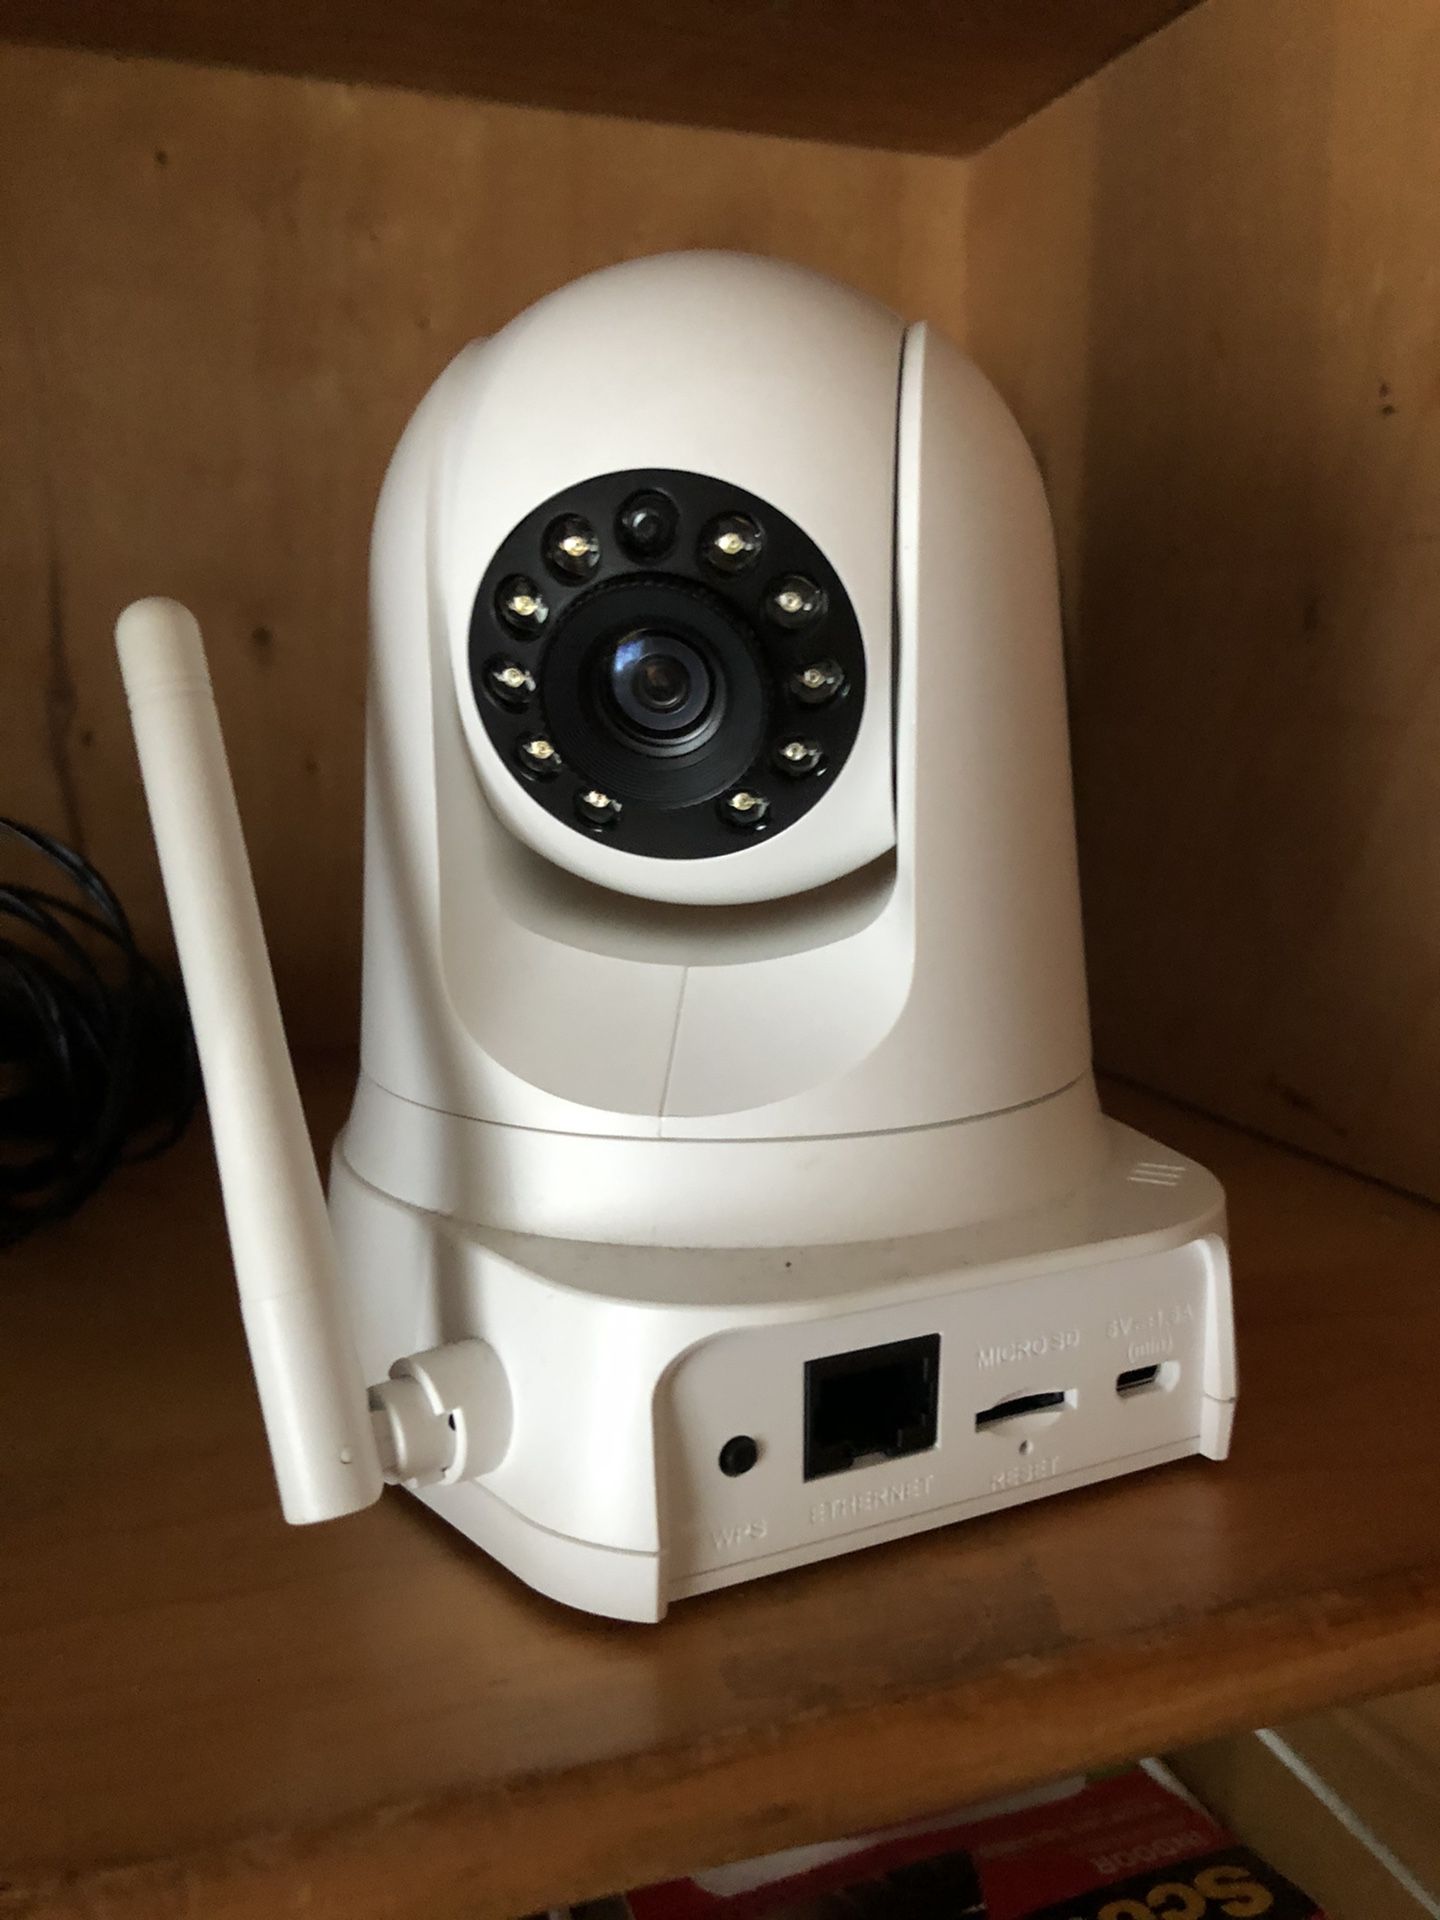 Dlink home security camera